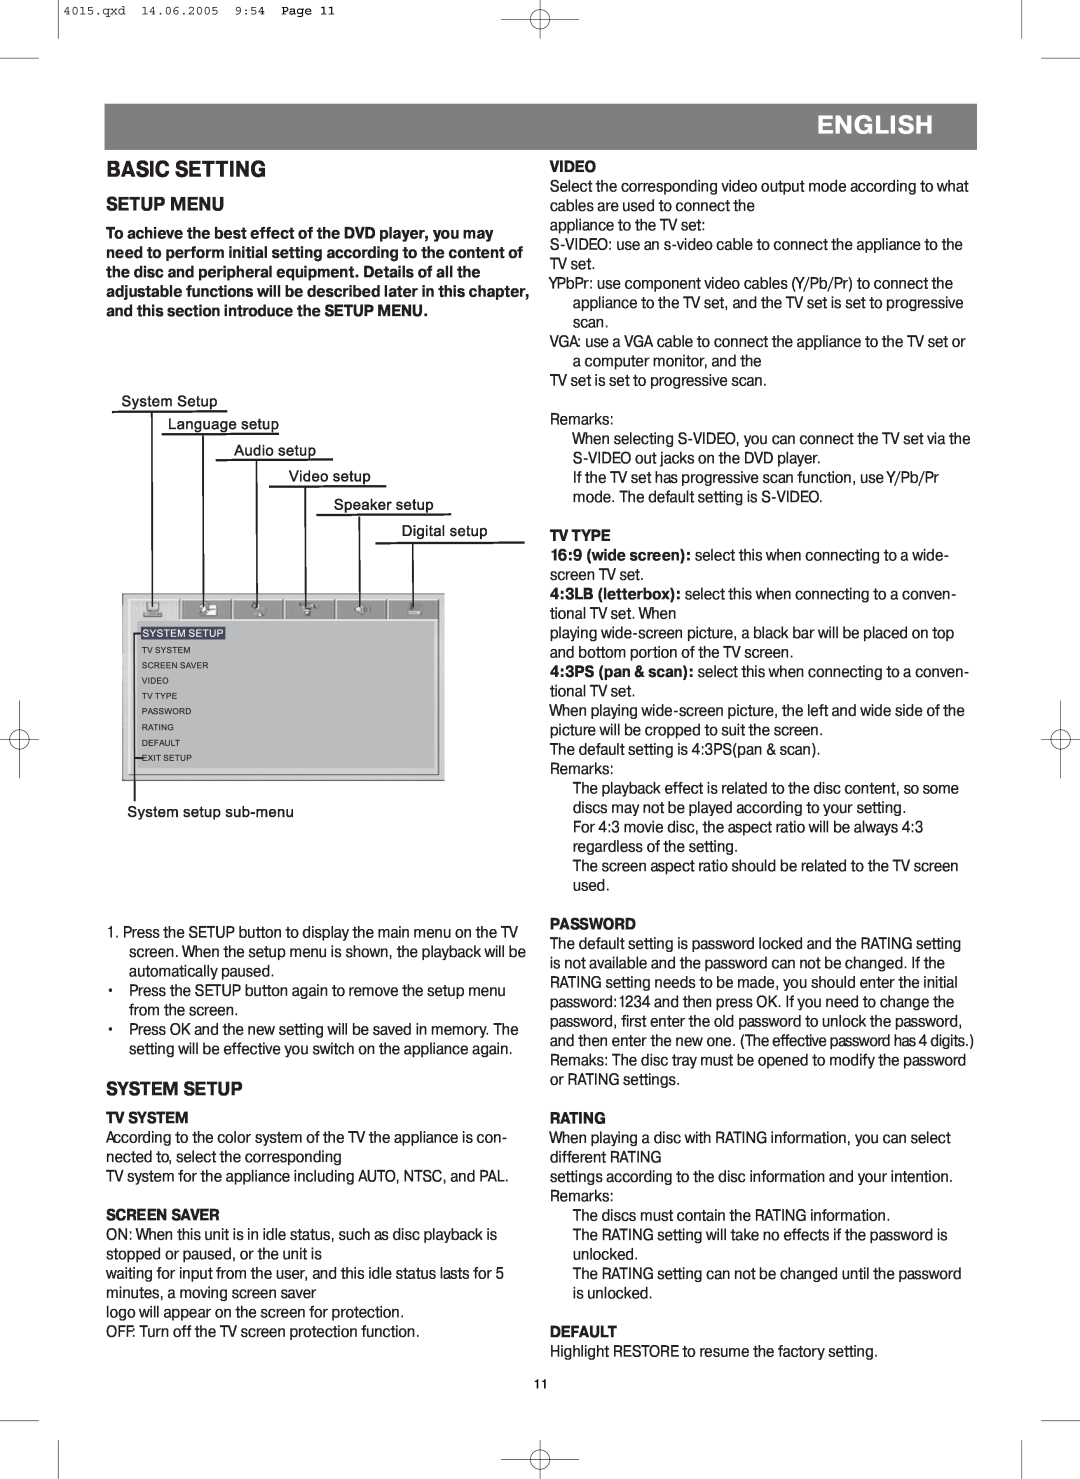 LG Electronics VT 4015 instruction manual Basic Setting, Setup Menu, System Setup, English 